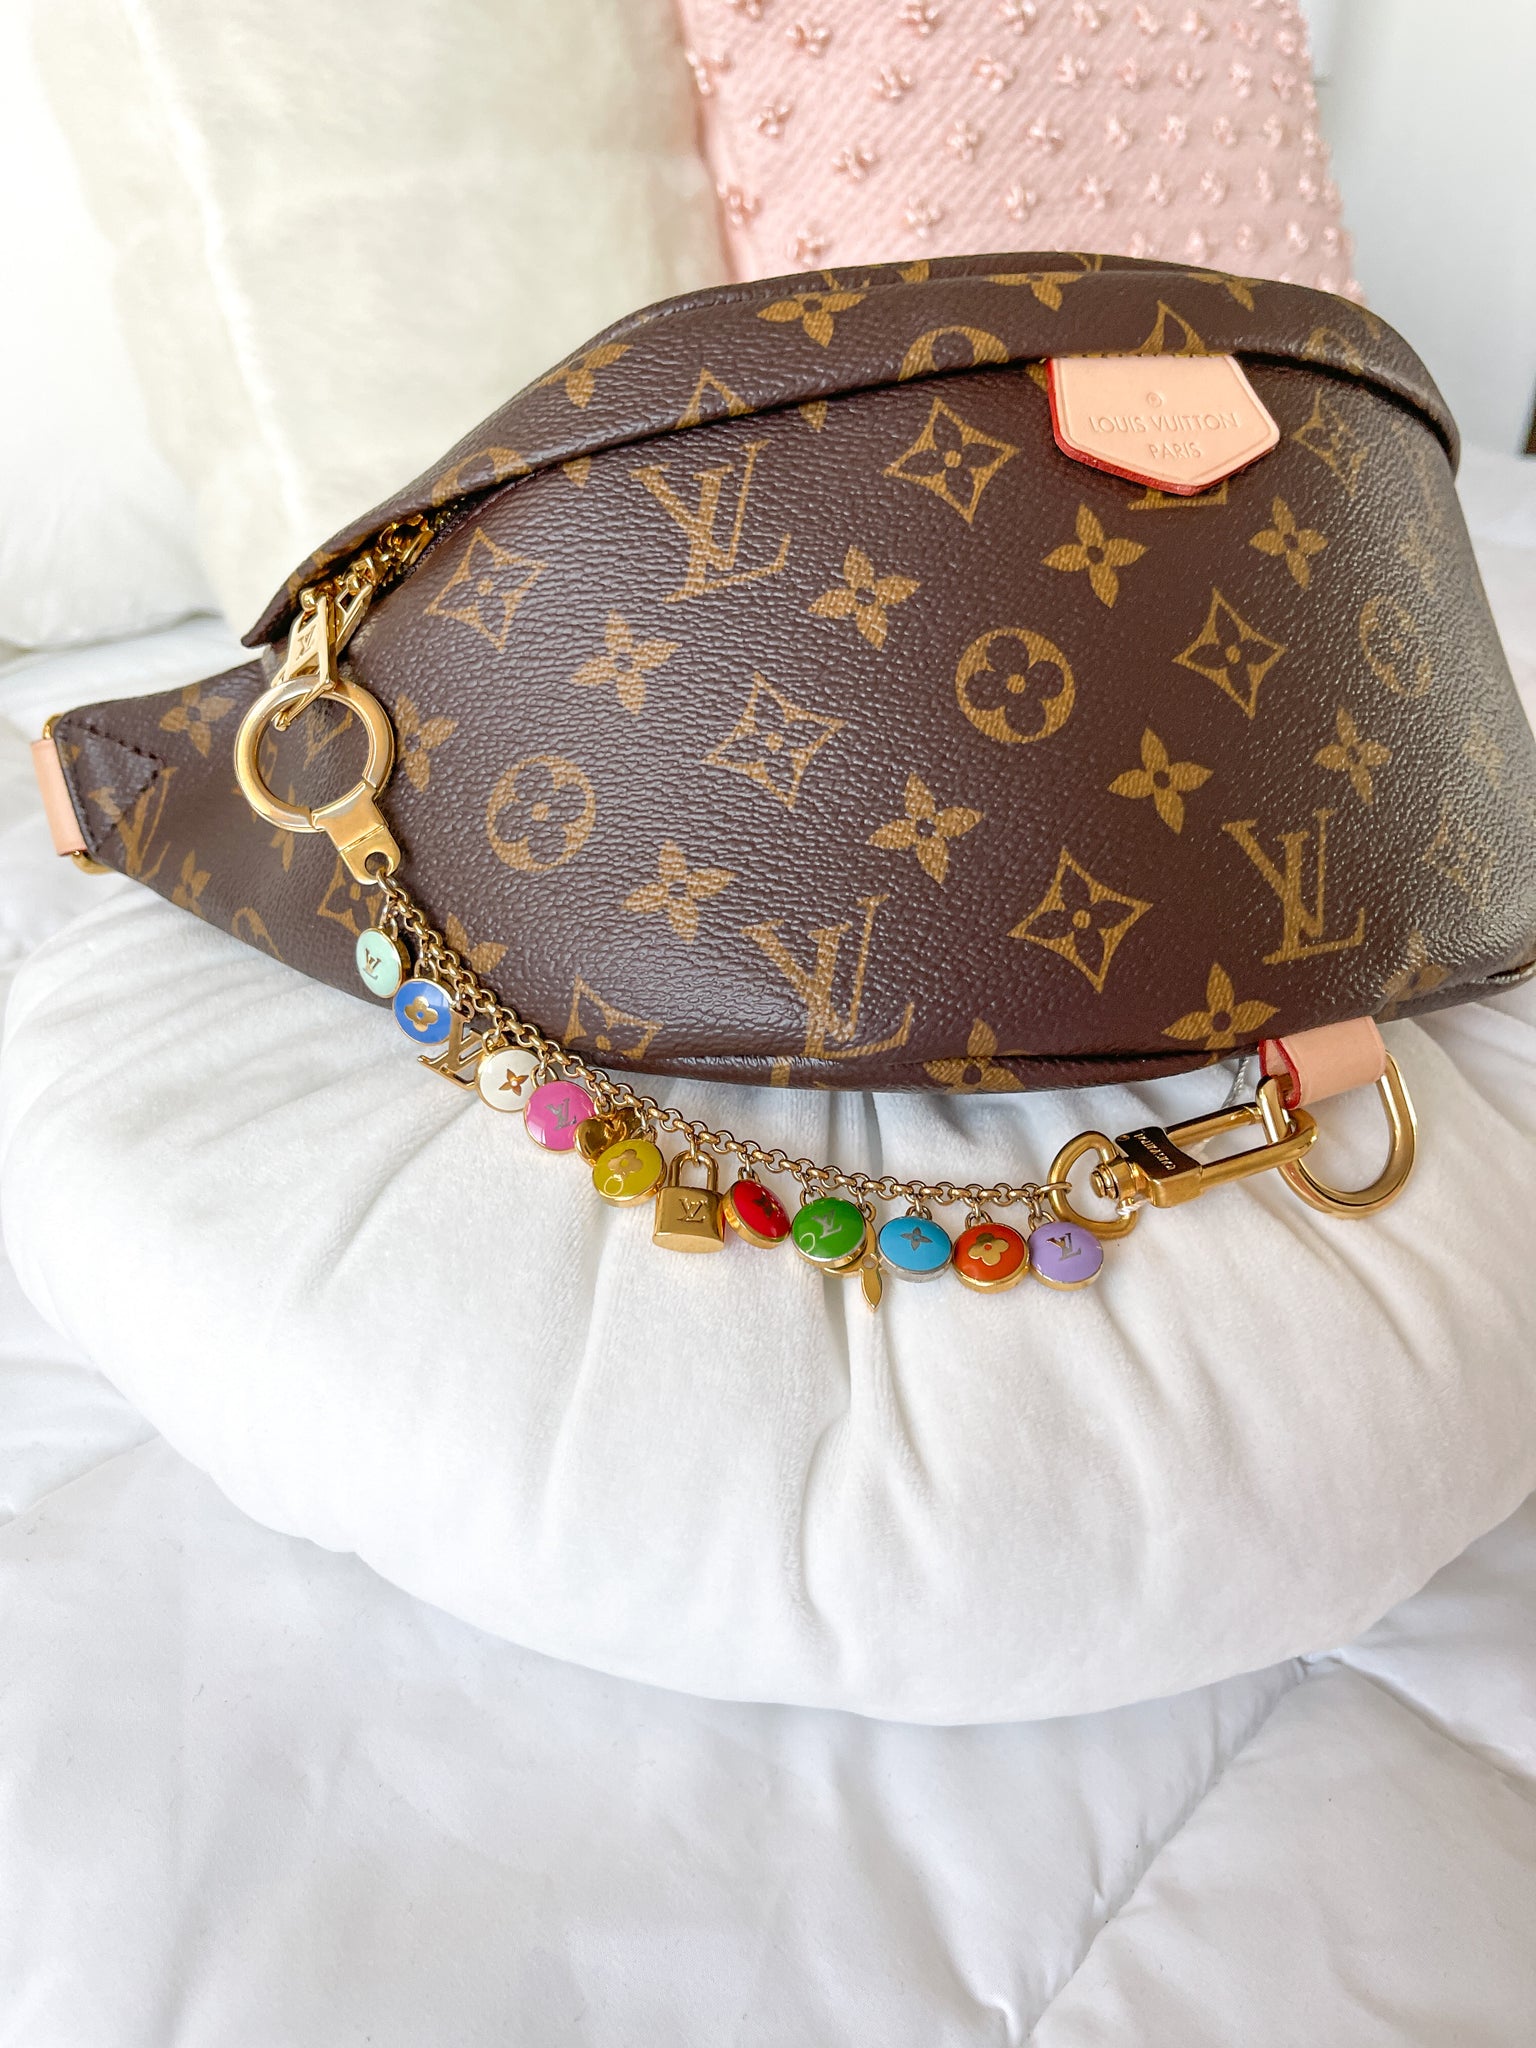 Louis Vuitton Multicolor Resin Pastilles Bag Charm and Key Holder